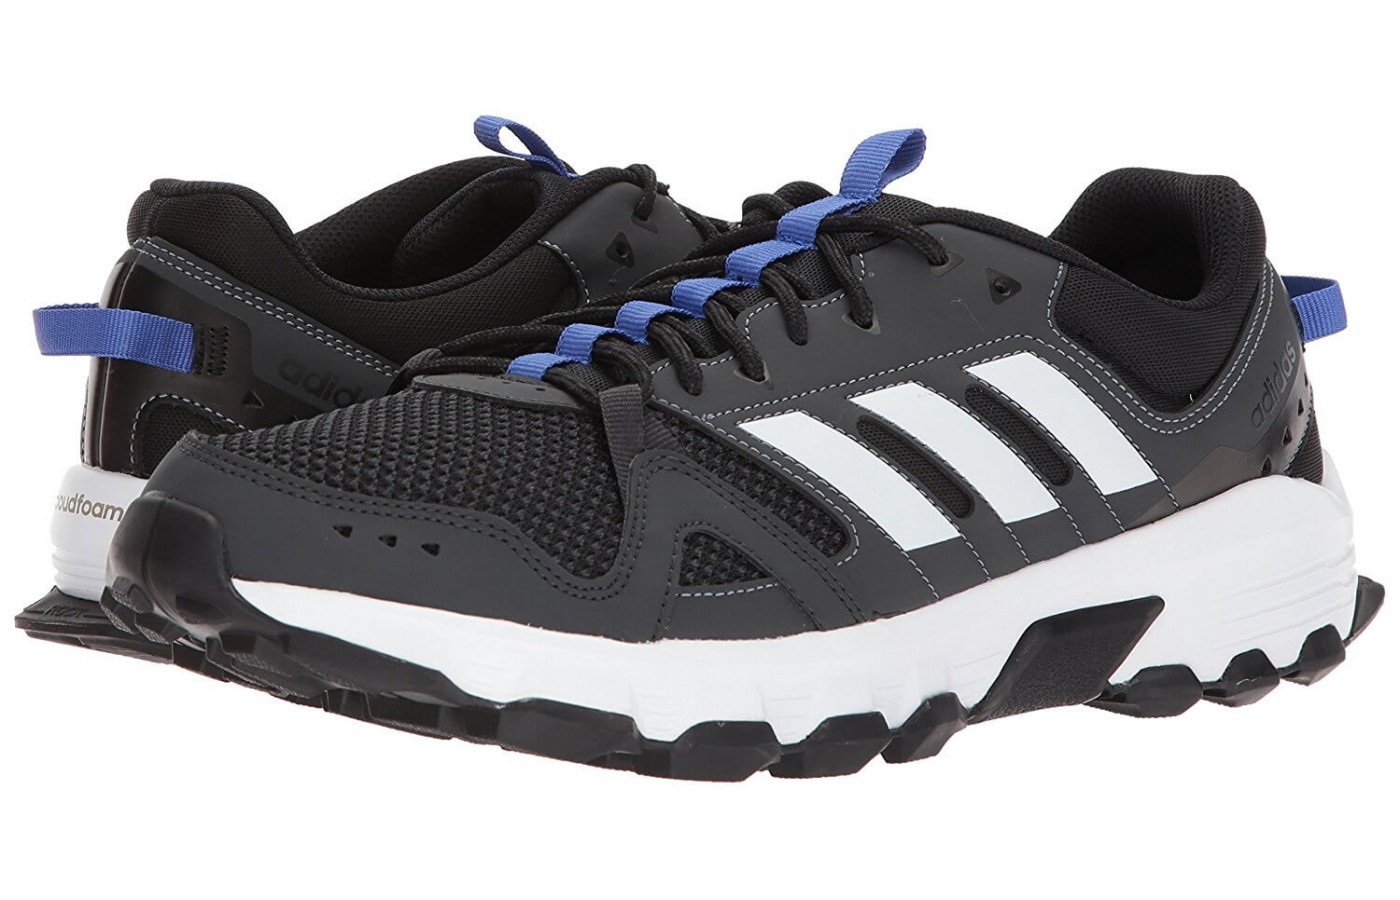 Adidas Trail RunnerClick